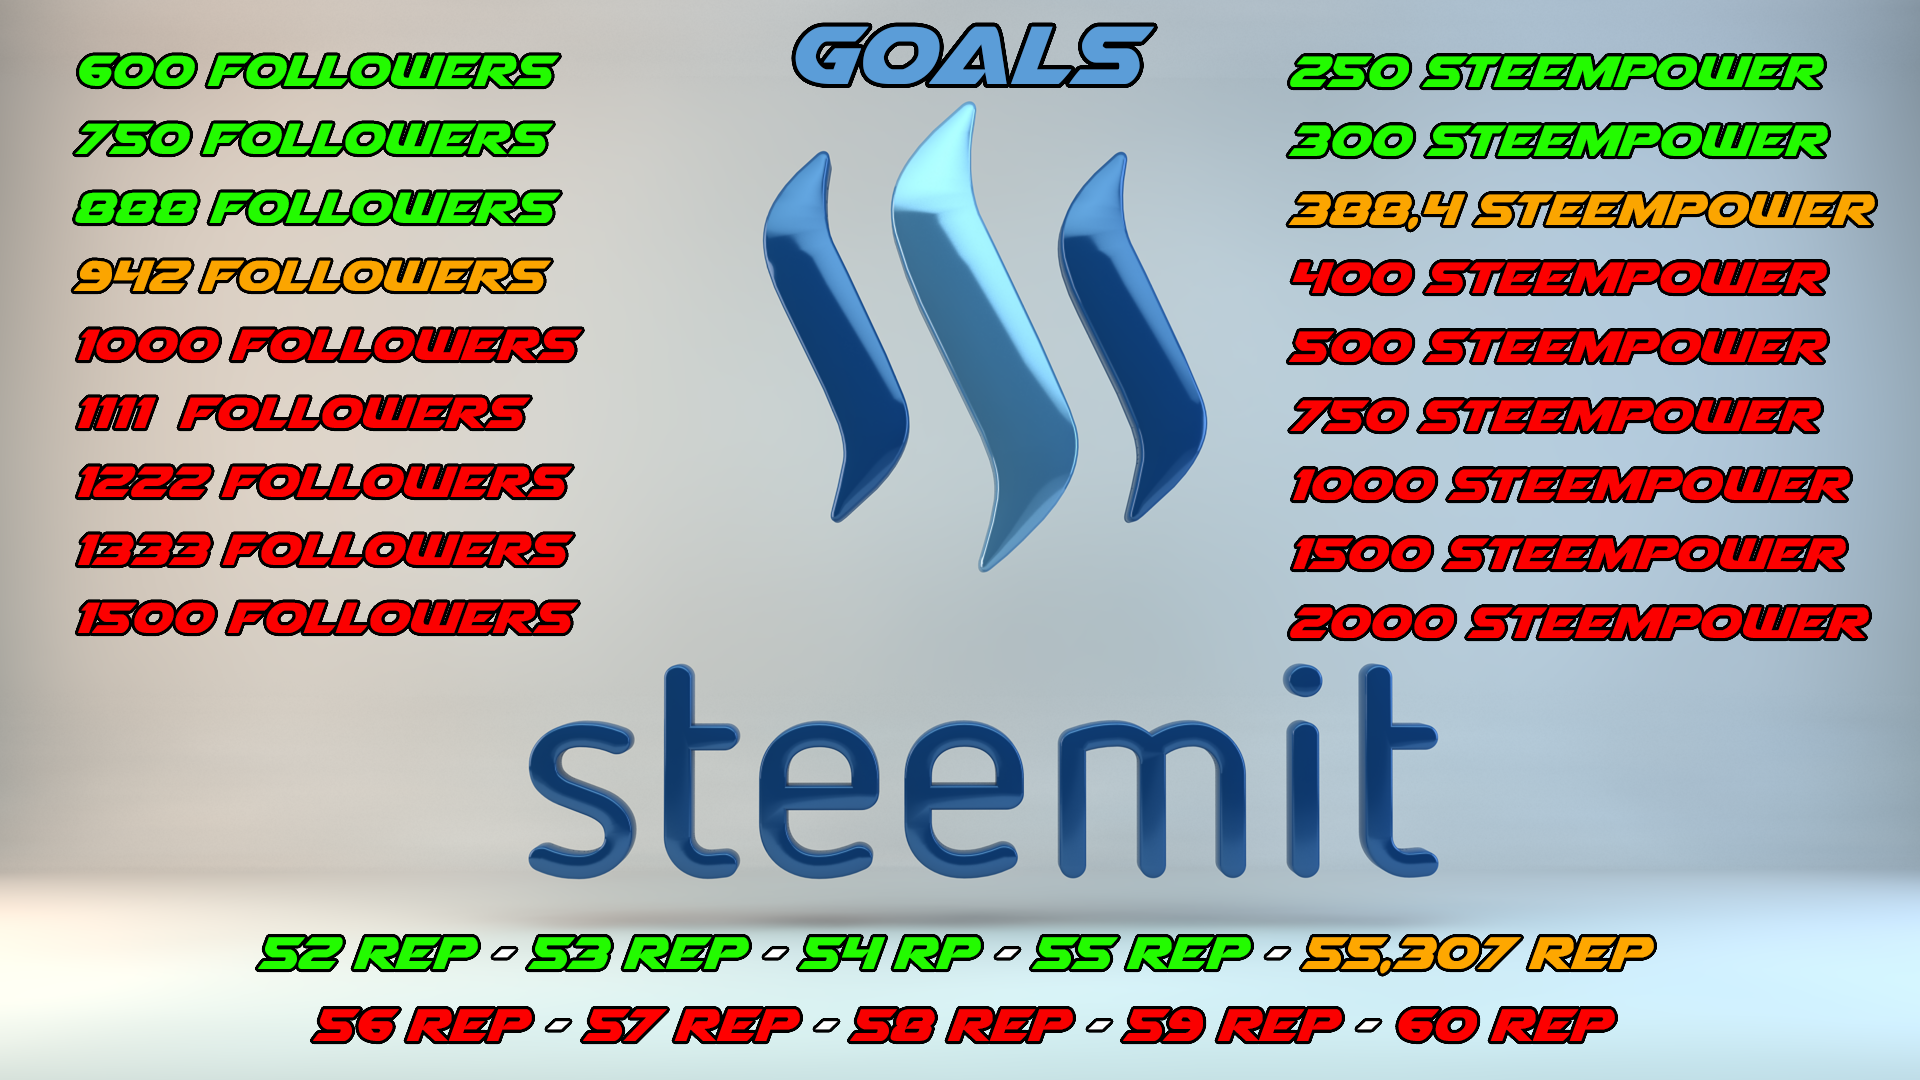 Steemit_Goals.png